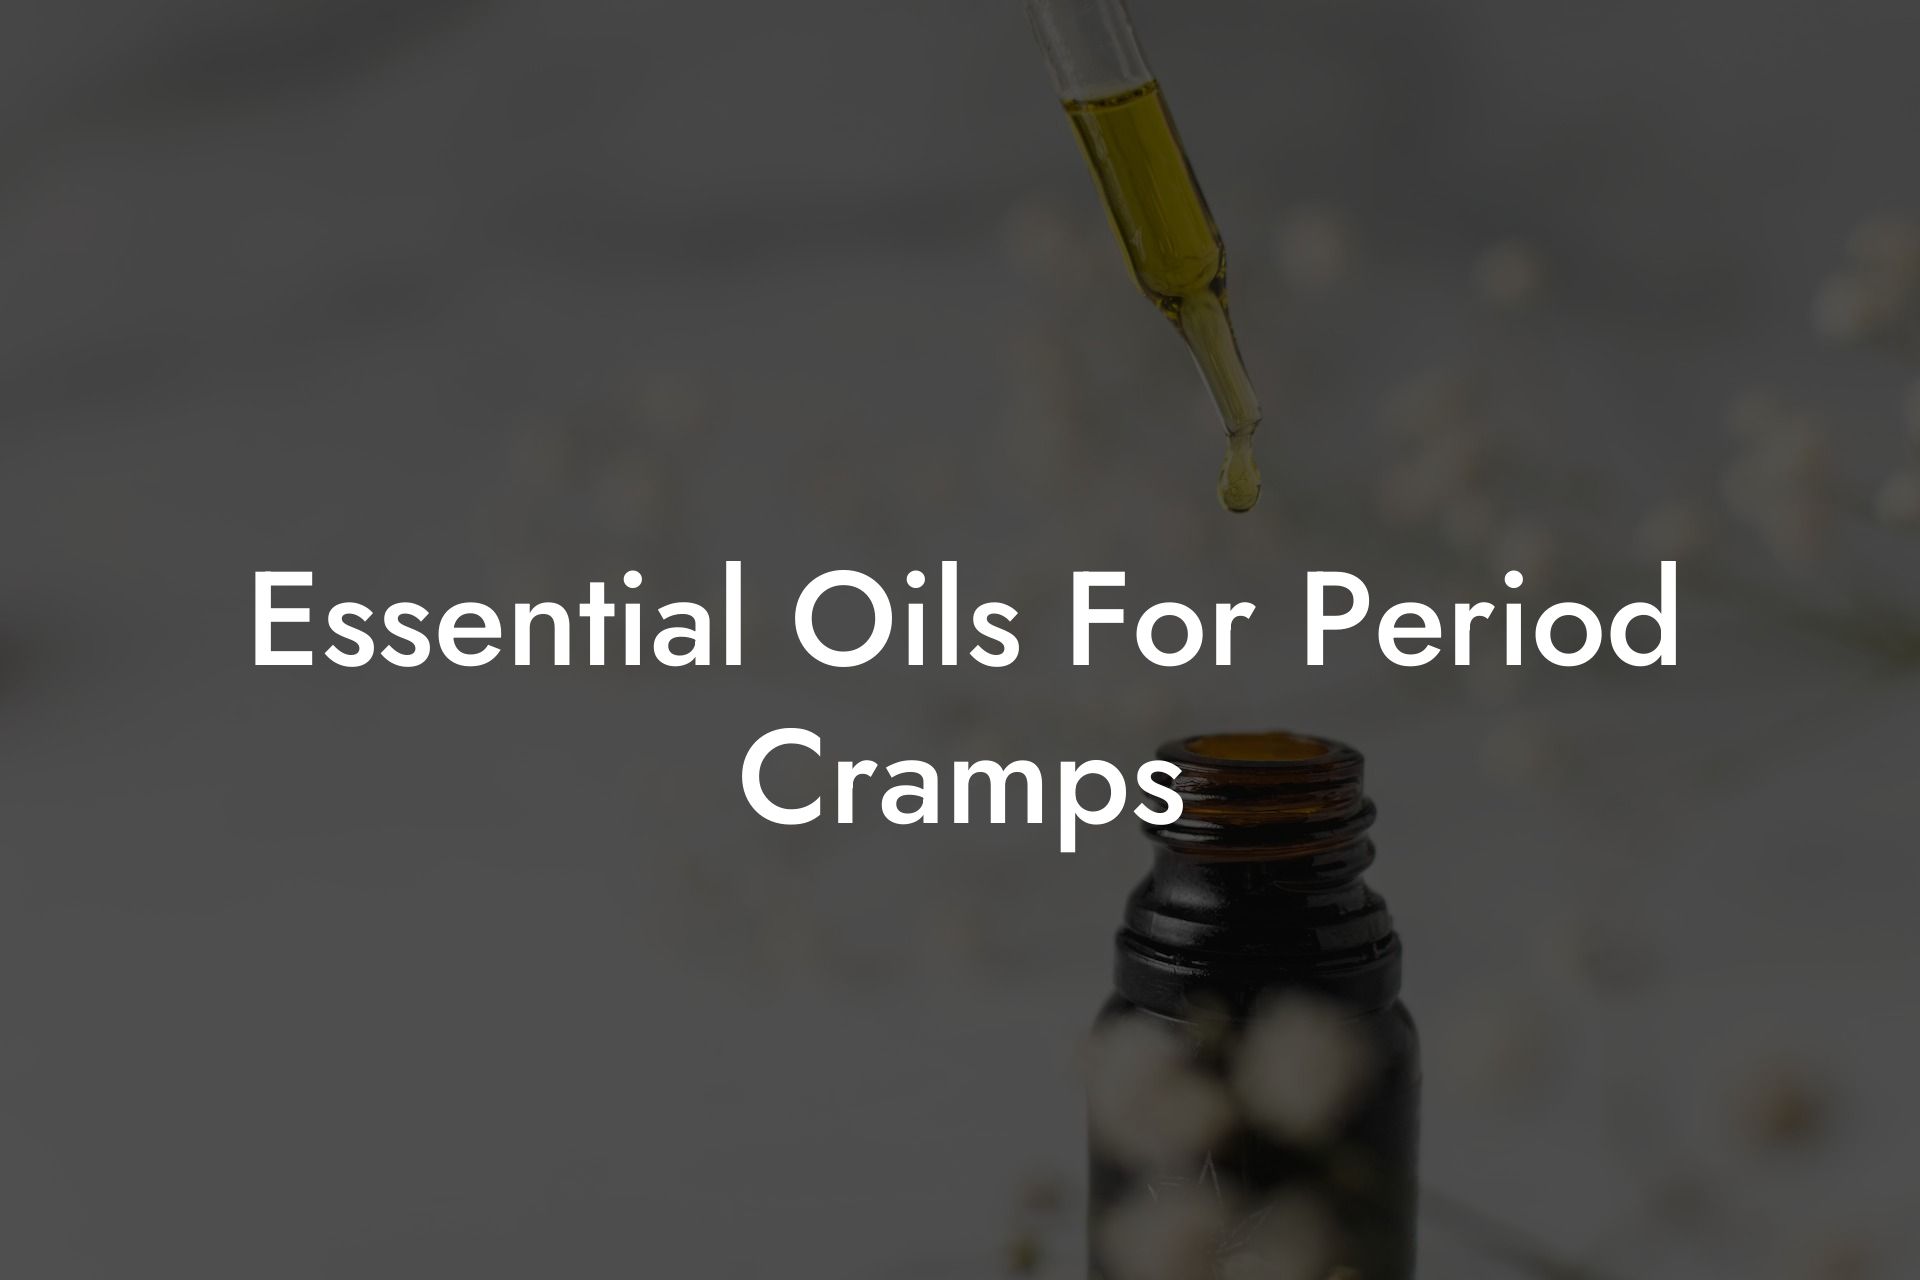 Essential Oils For Period Cramps